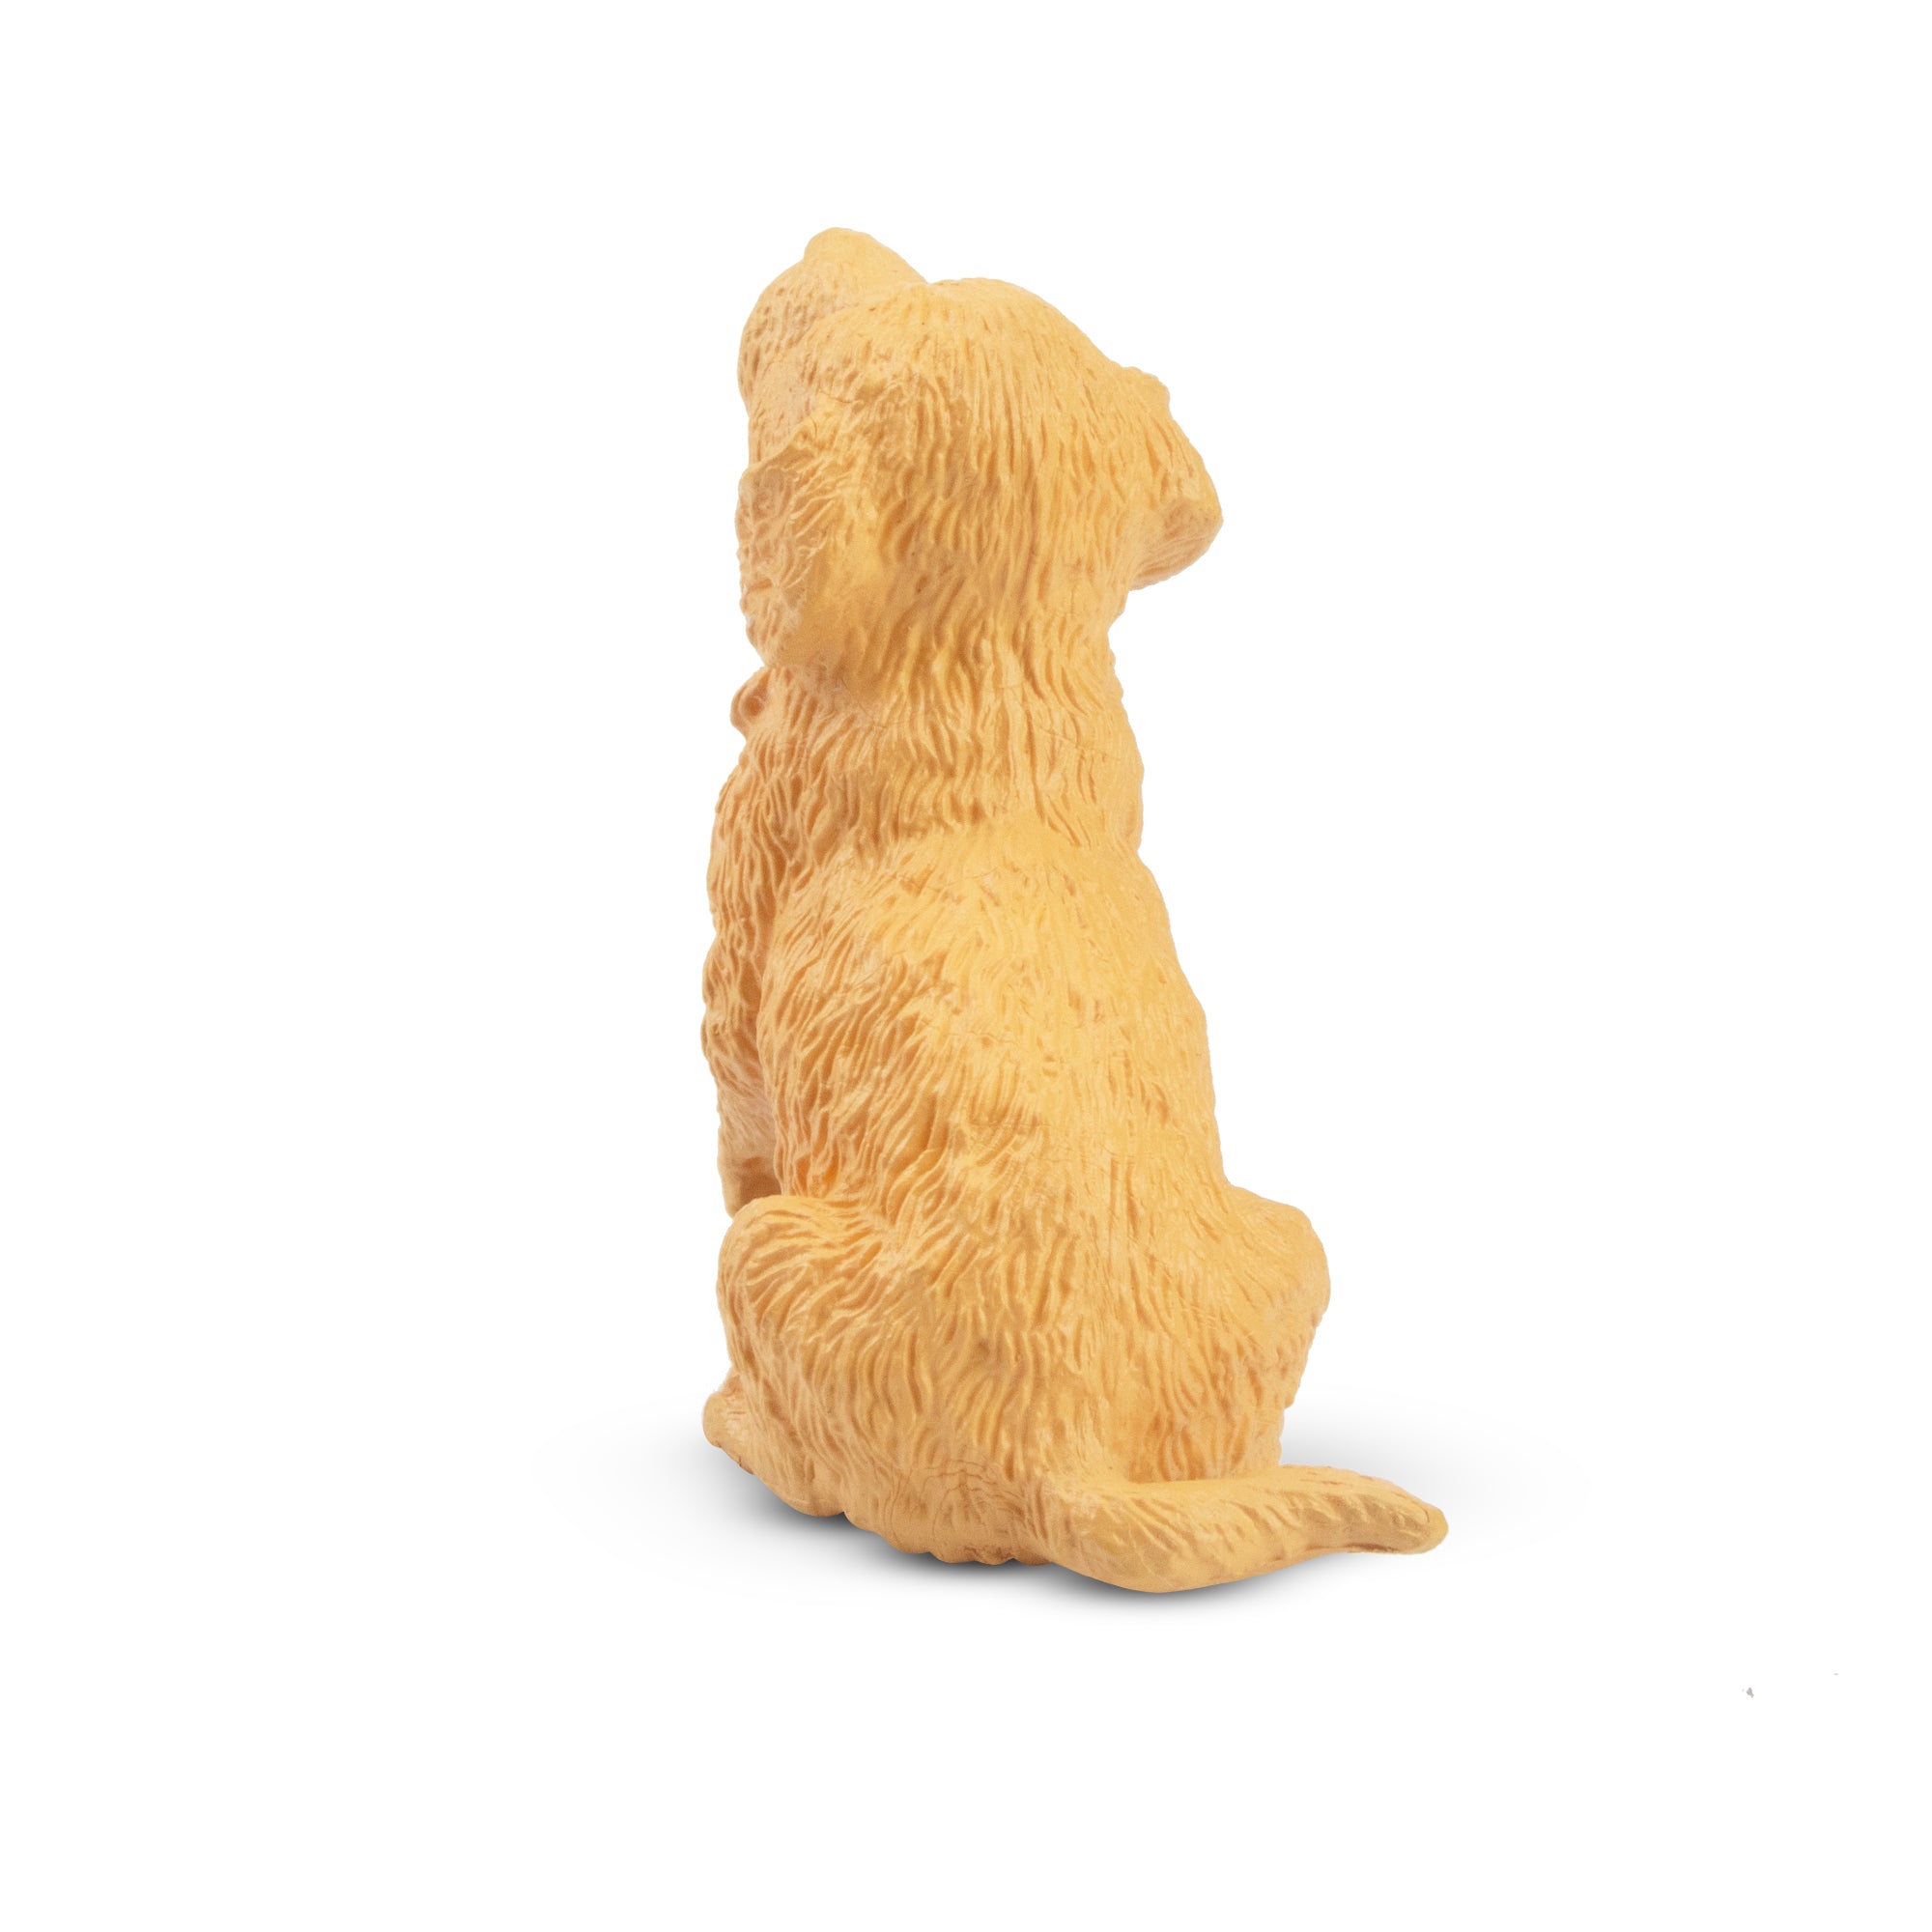 Toymany Mini Sitting Golden Retriever Puppy Figurine Toy-back